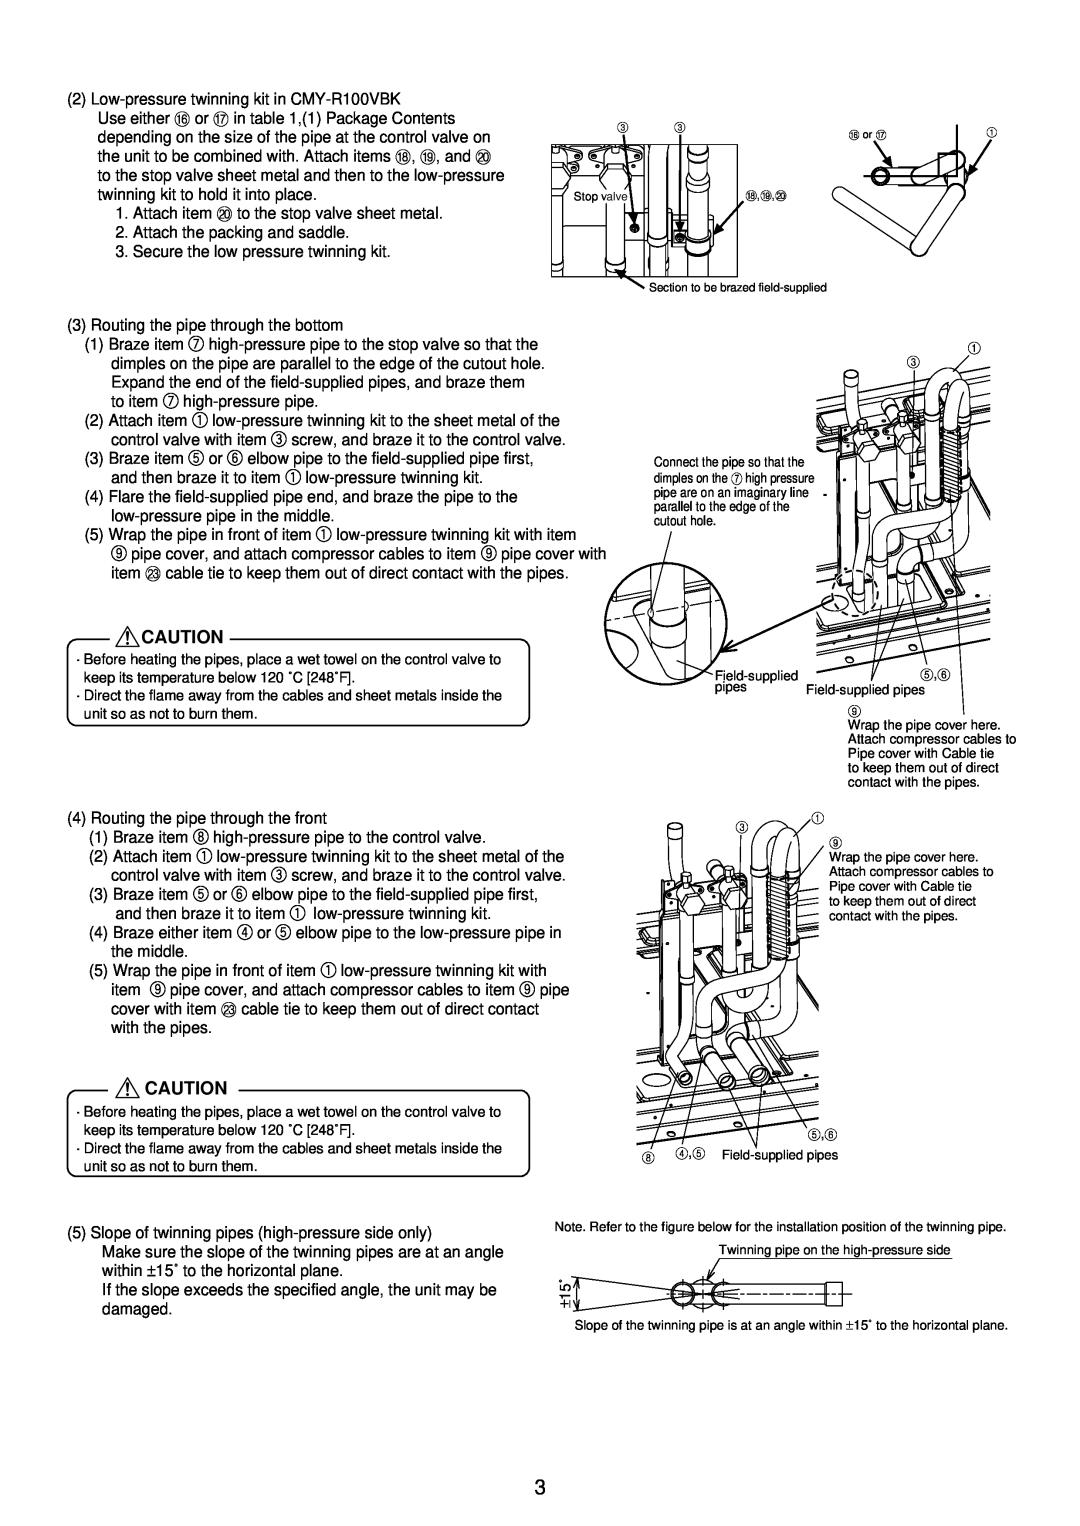 Mitsumi electronic CMY-R200VBK installation manual Low-pressuretwinning kit in CMY-R100VBK 